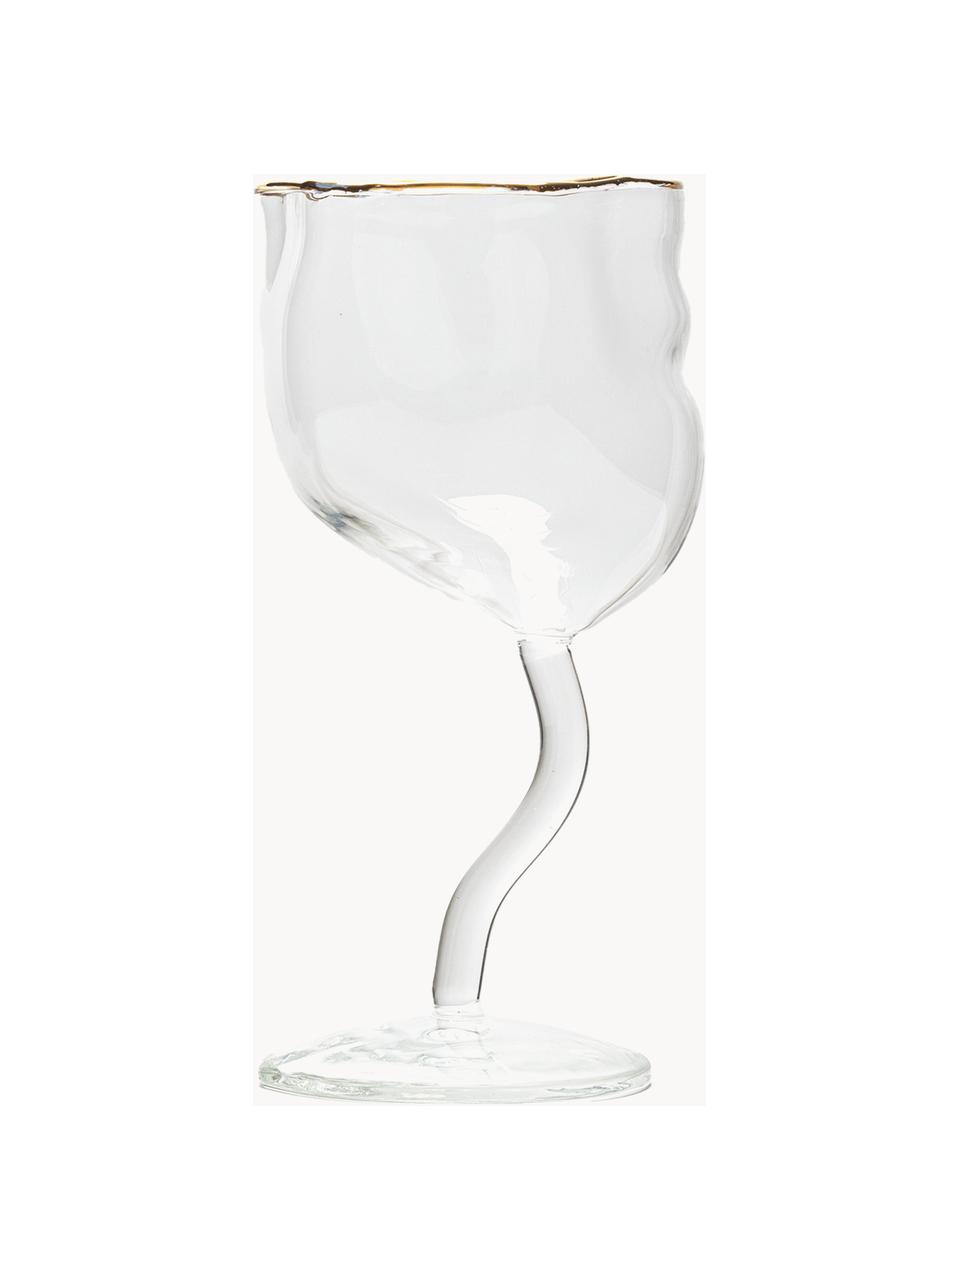 Wijnglas Classic On Acid met goudkleurige decoratie, Rand: goudkleurig, Transparant, Ø 9 x H 17 cm, 250 ml